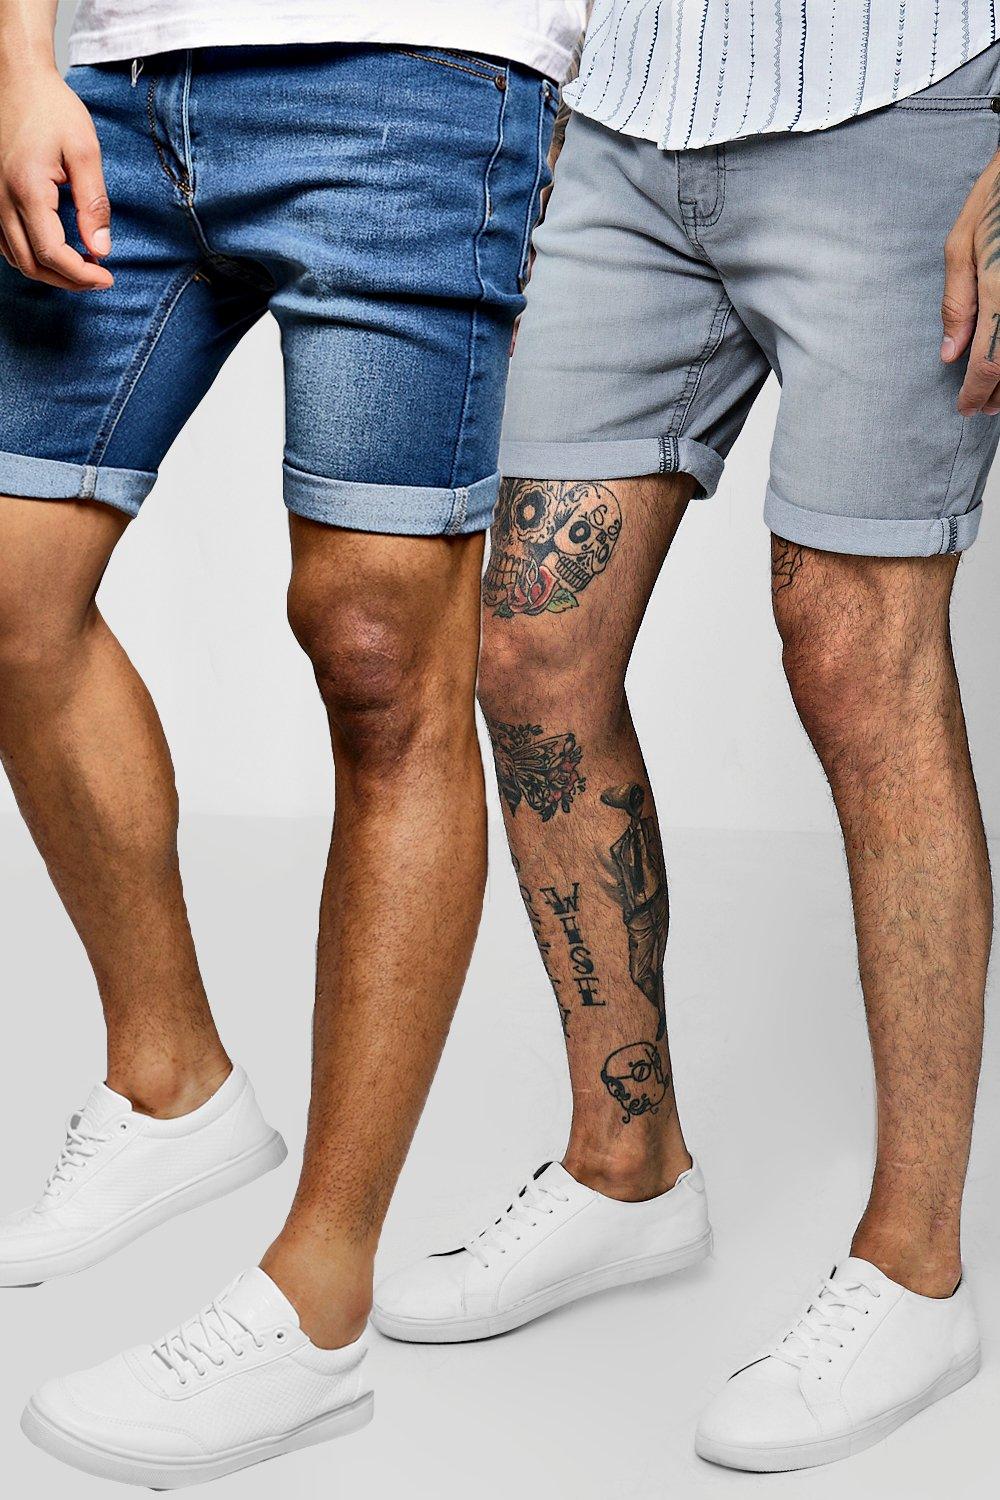 mens jean shorts slim fit